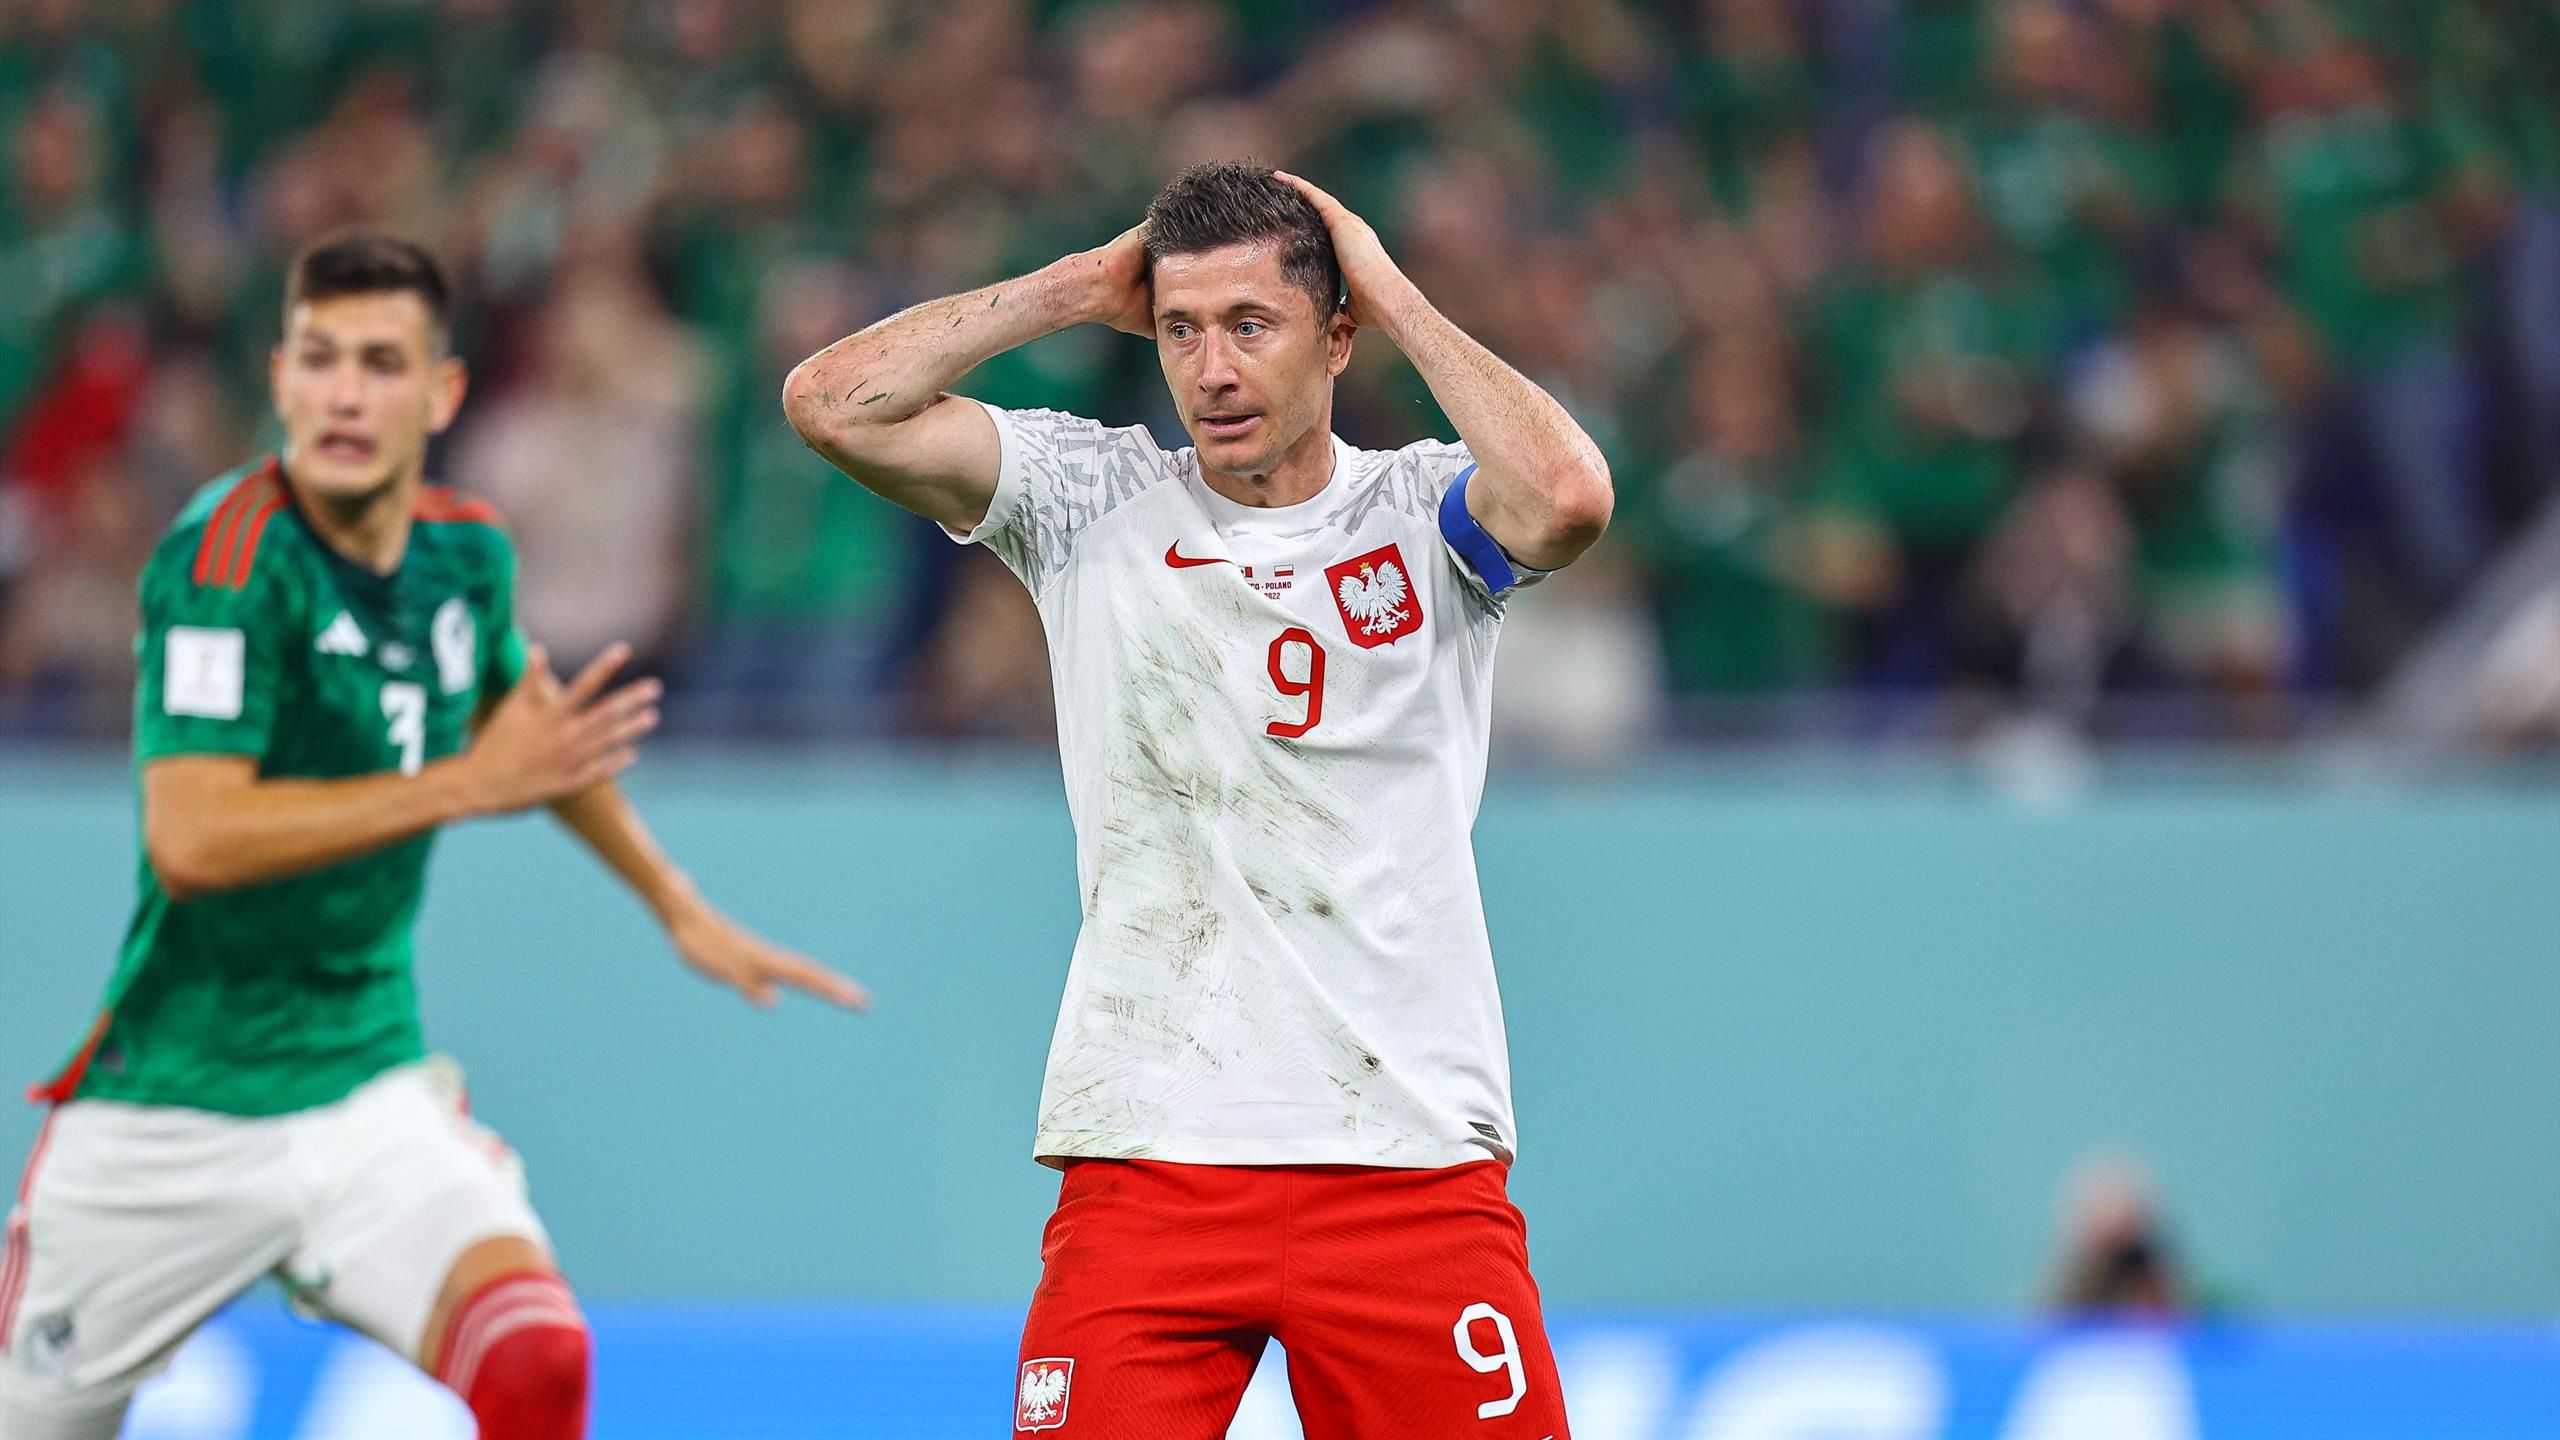 Lewandowski ends World Cup drought as Poland claim vital win - ESPN